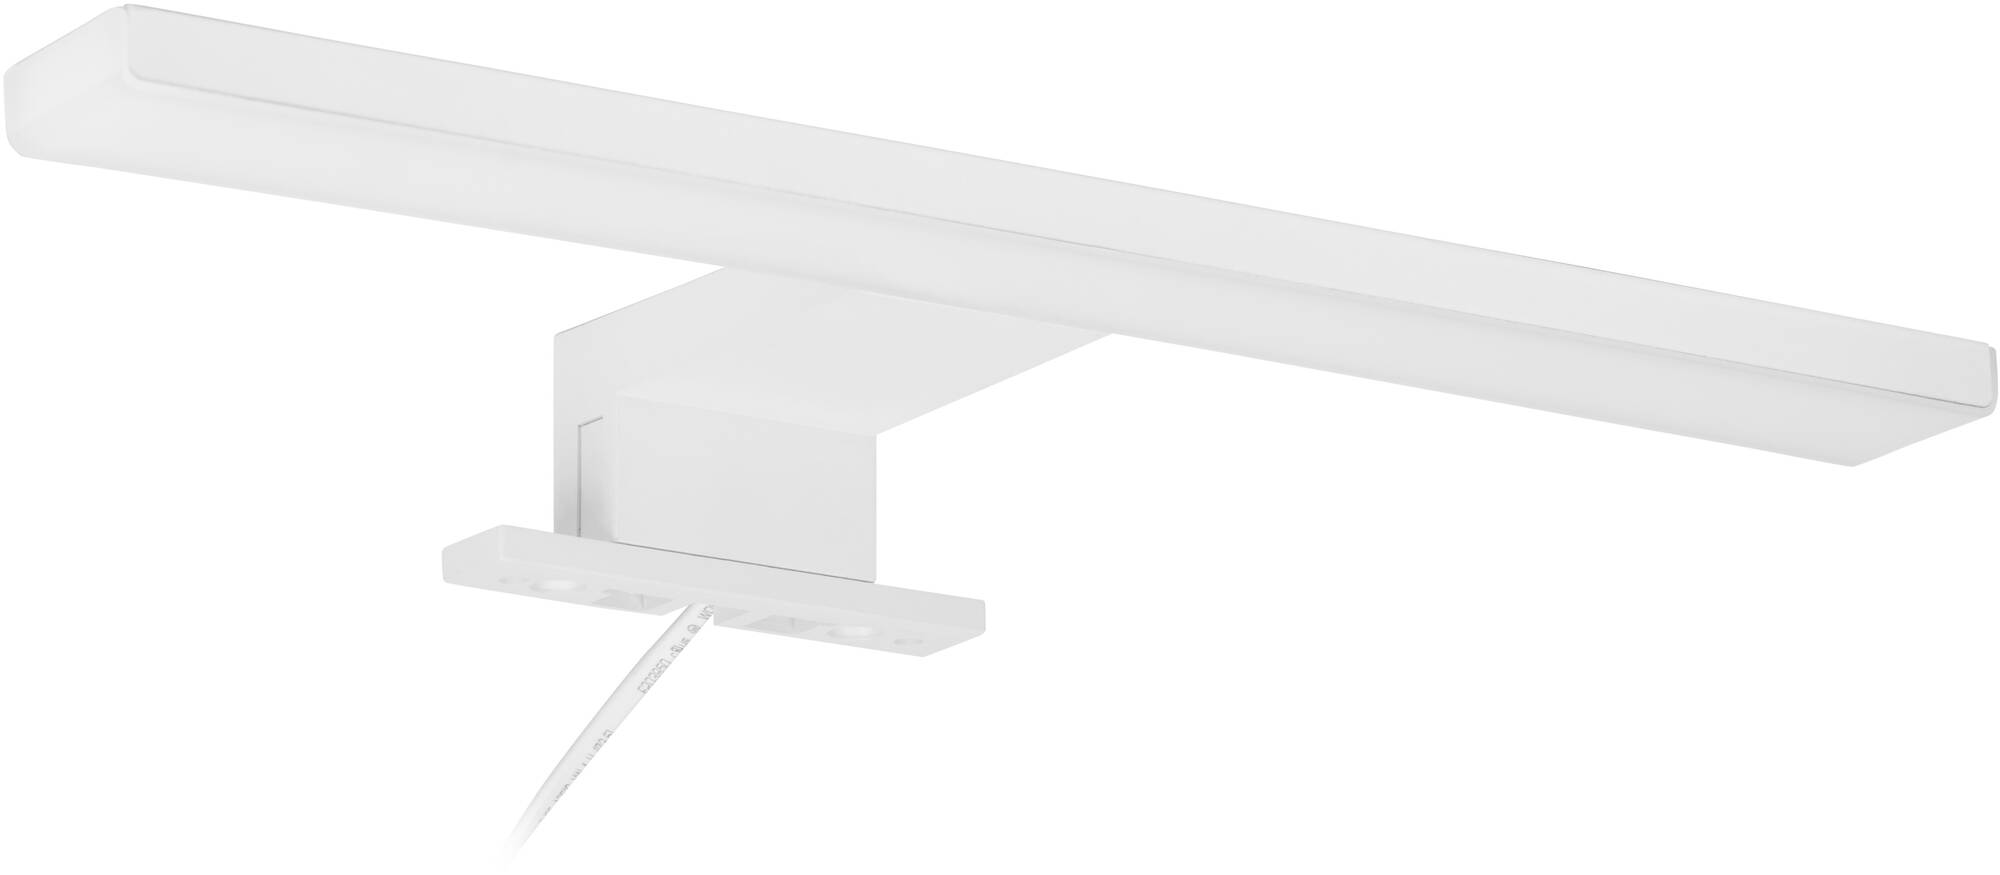 Saniselect Letto Verlichting LED voor Spiegel/Spiegelkast inclusief trafo 30 cm Mat Wit